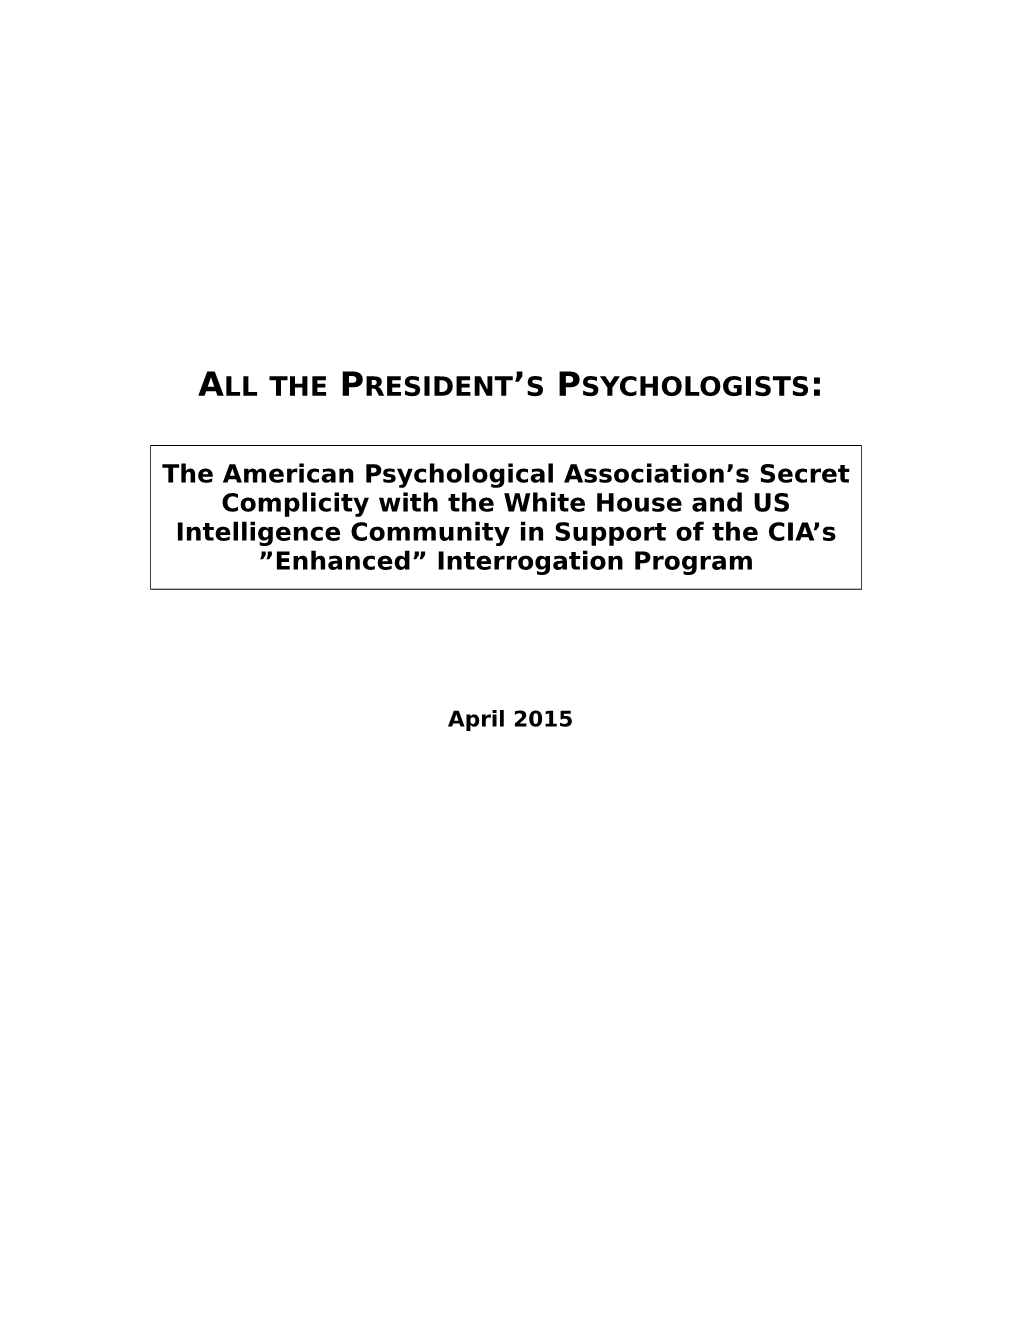 The President's Psychologists